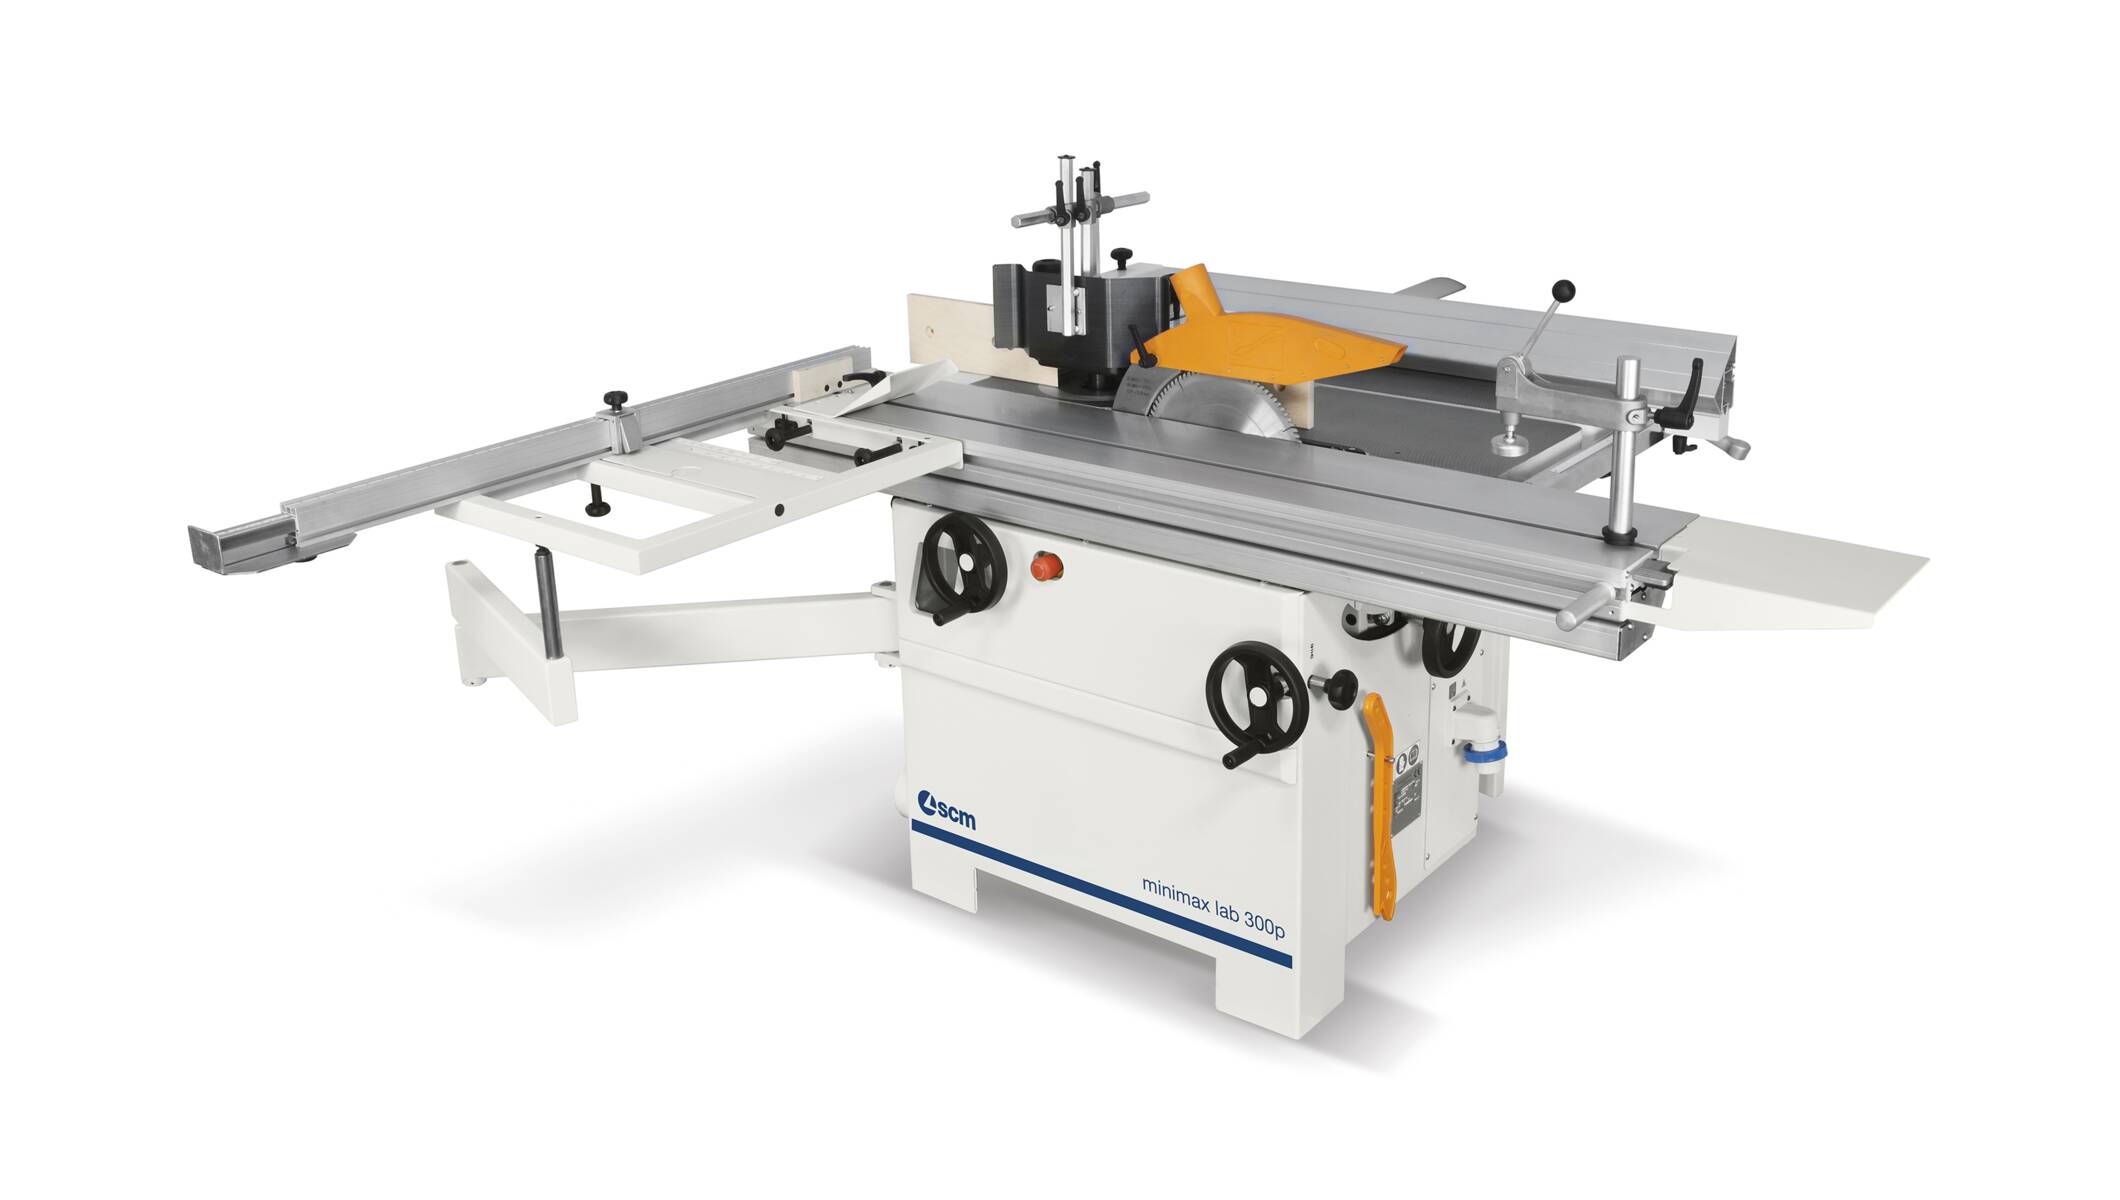 Maquinas para carpinteria - Máquinas combinadas universales - minimax lab 300p